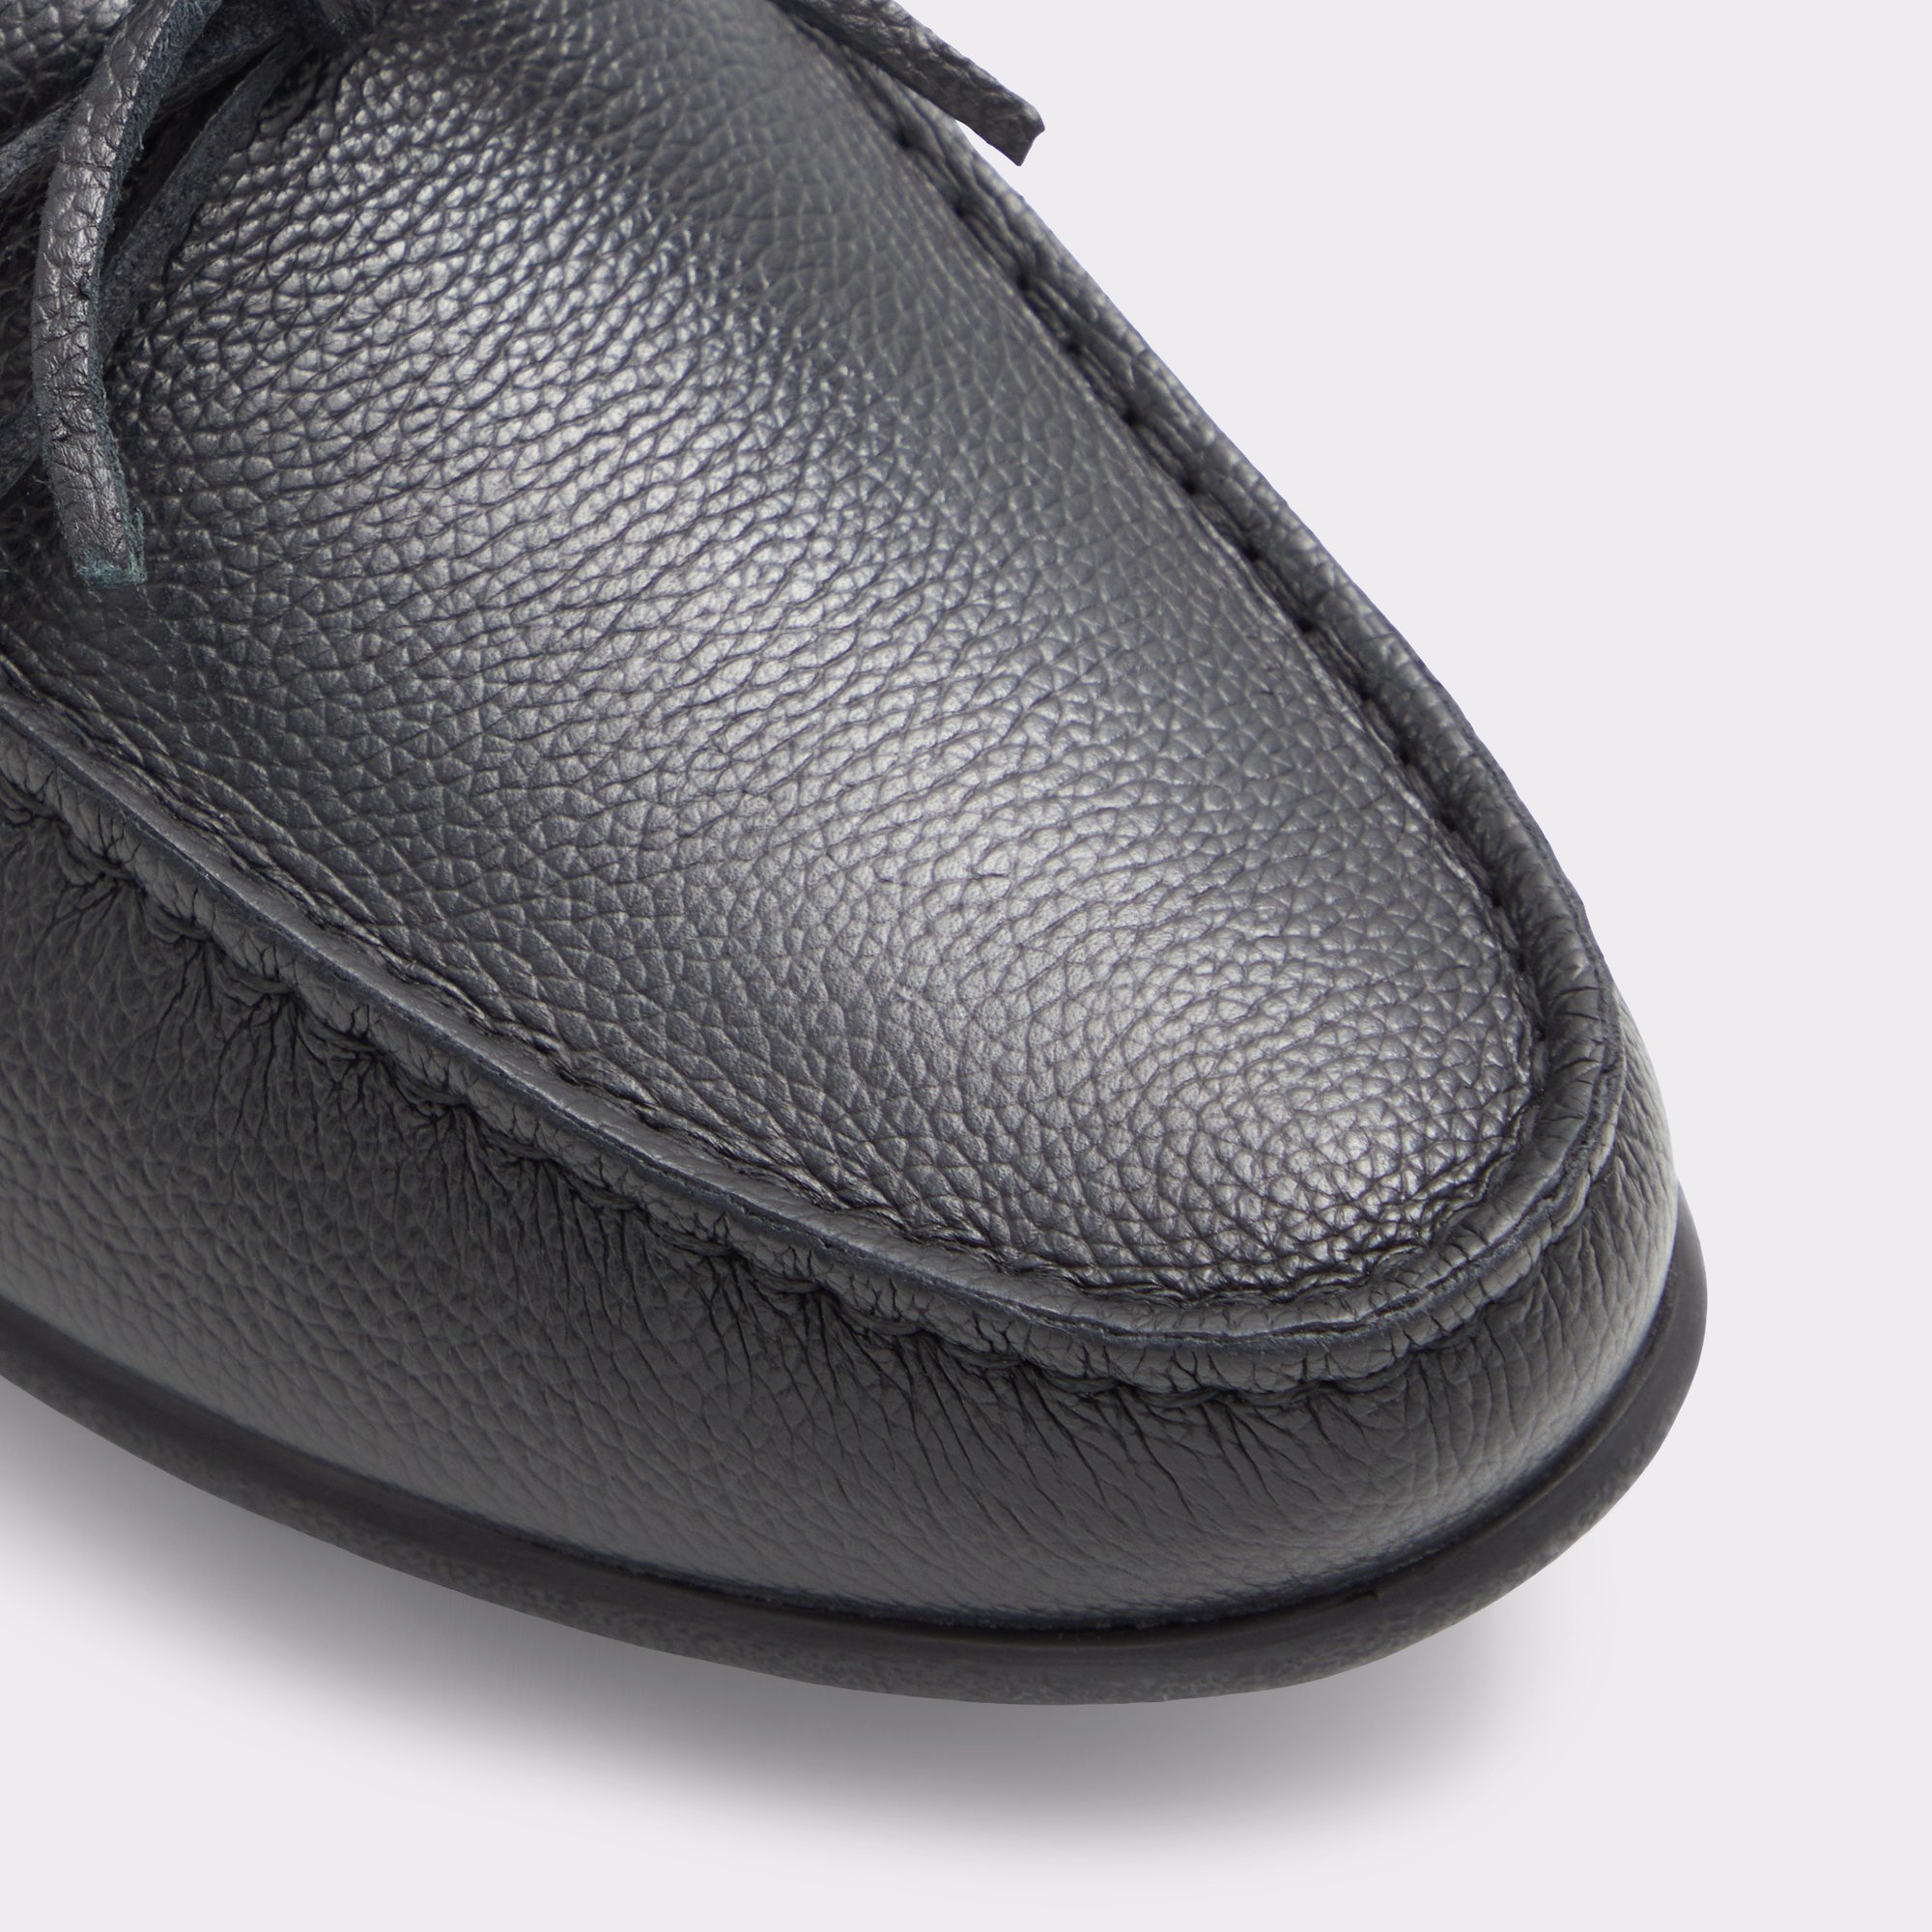 Onesh Black Men's Casual Shoes | ALDO Canada